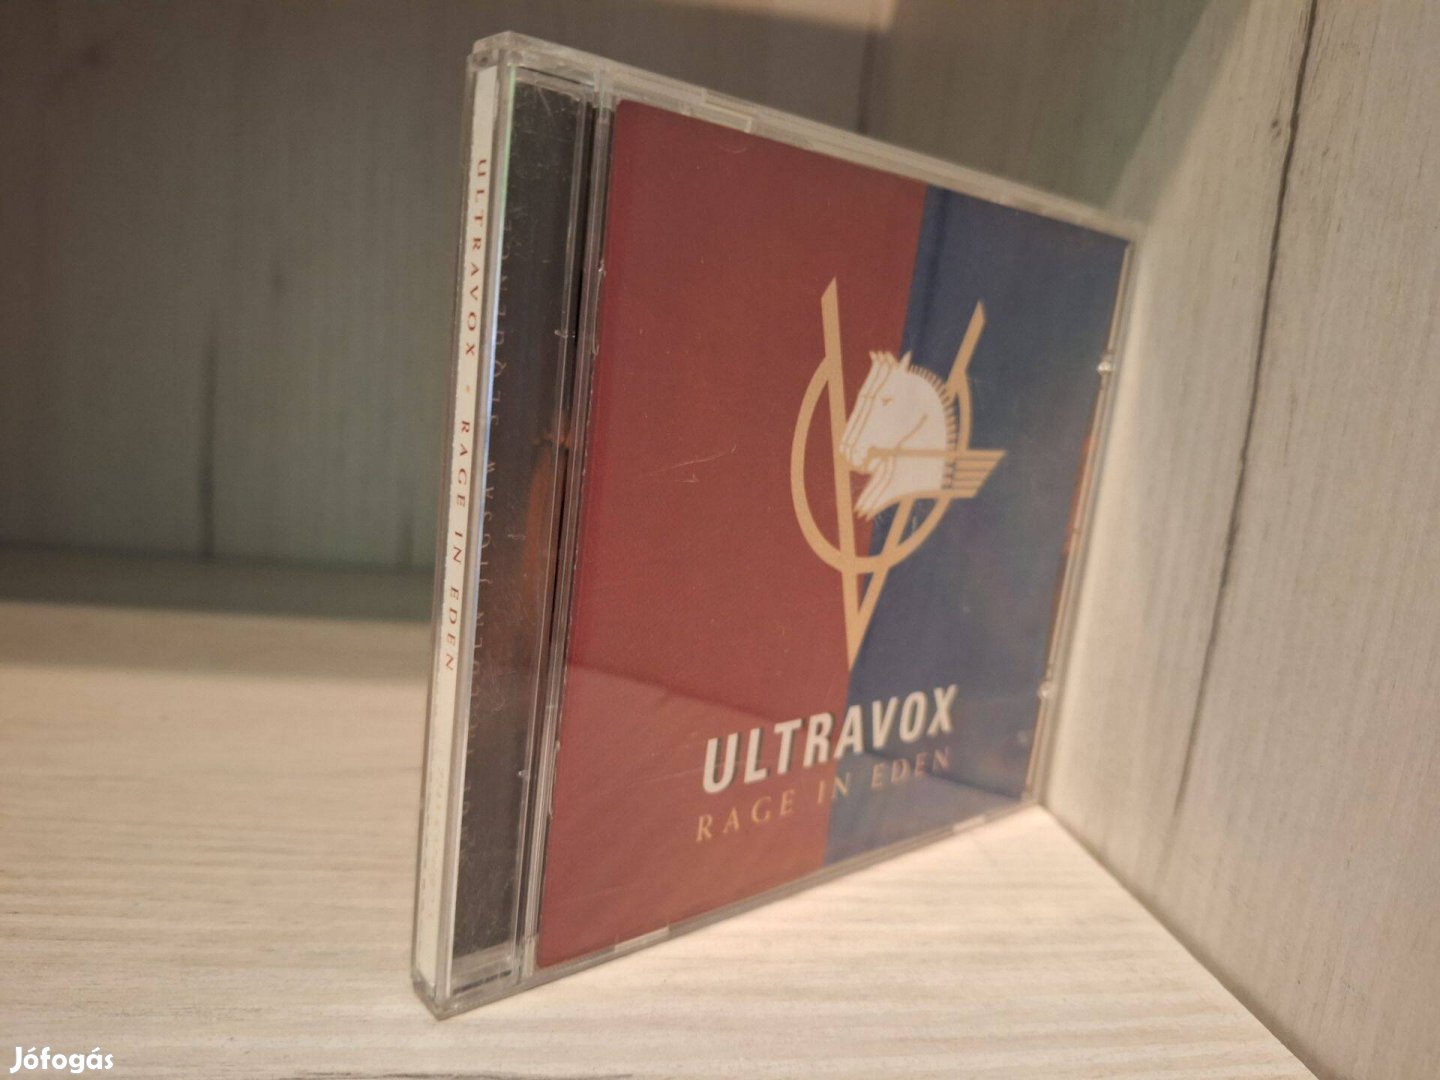 Ultravox - Rage In Eden CD